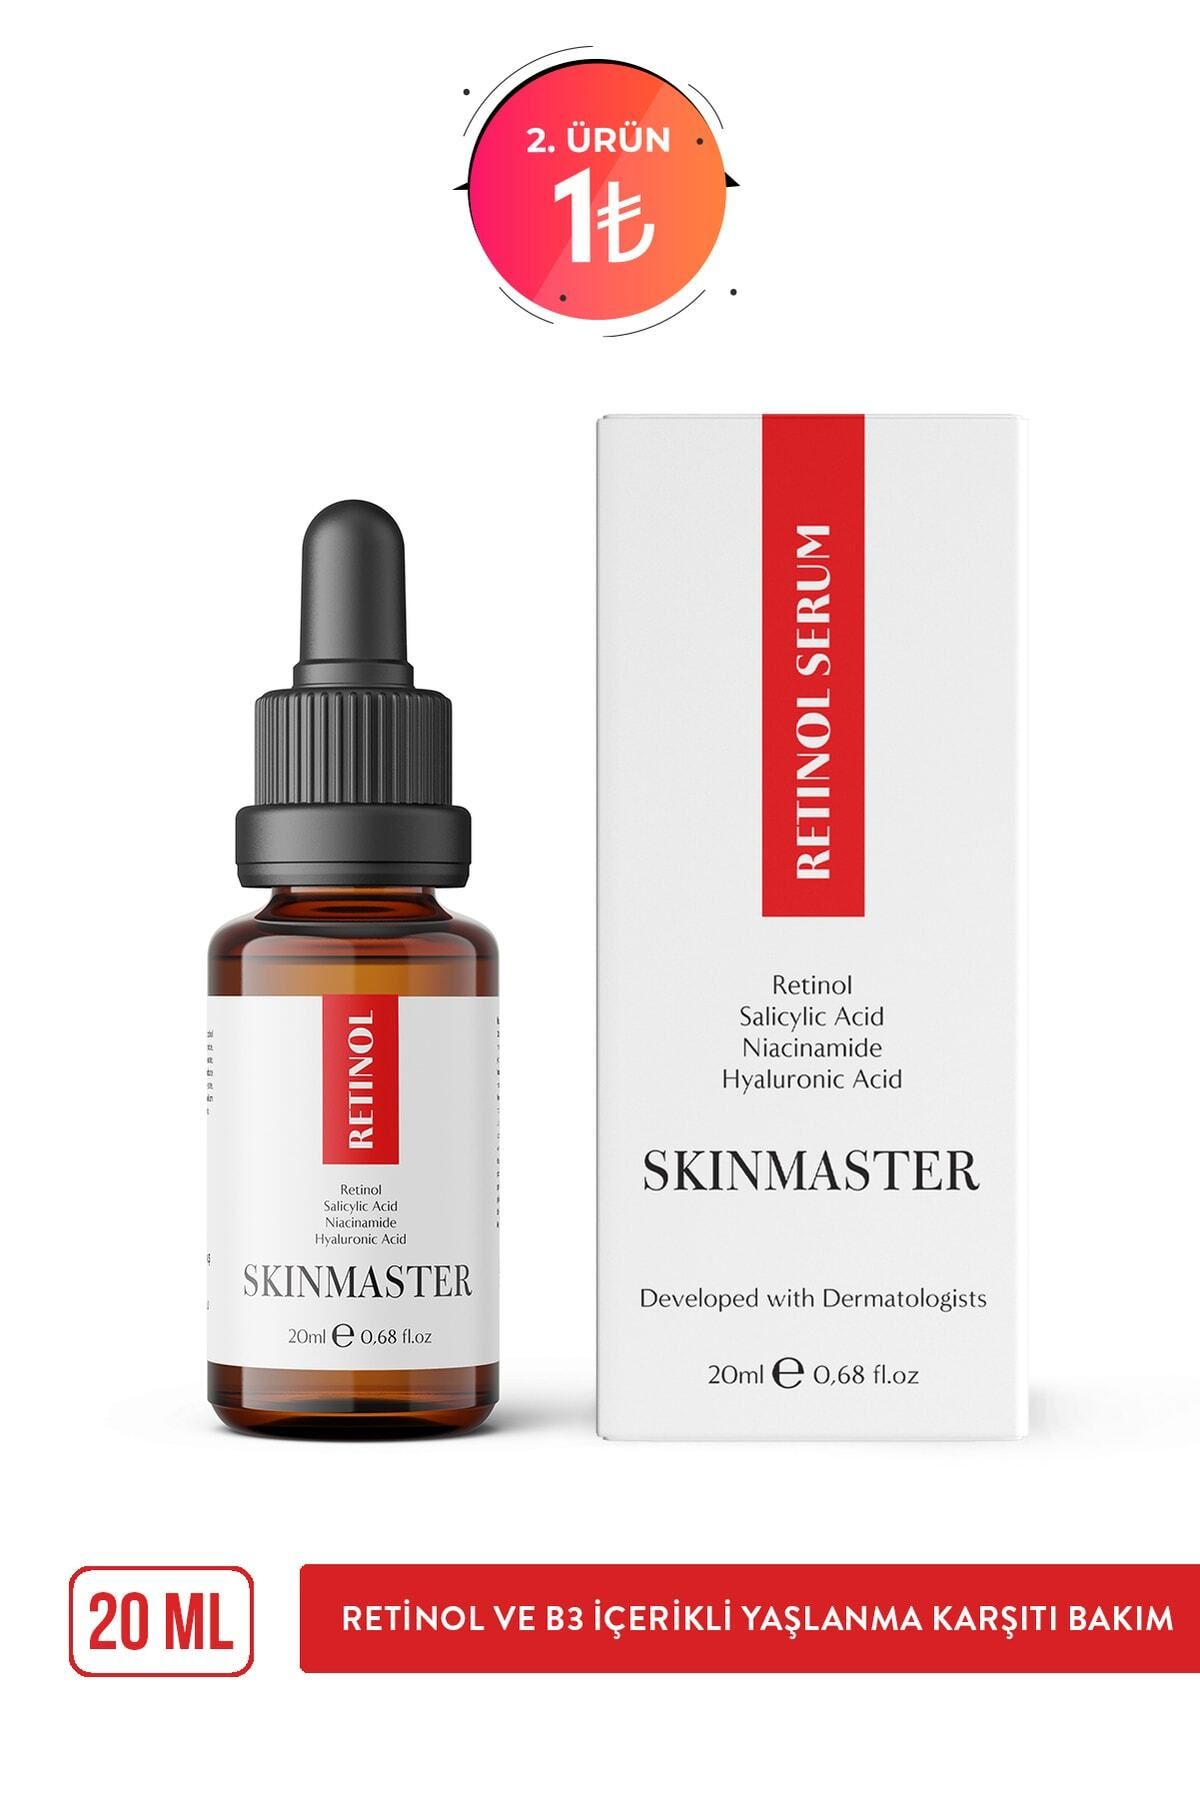 SkinMaster Retinol Ve B3 Içerikli Yaşlanma Karşıtı Bakım Serumu 20 Ml (retinol, Bha, Niasinamid, Ha)